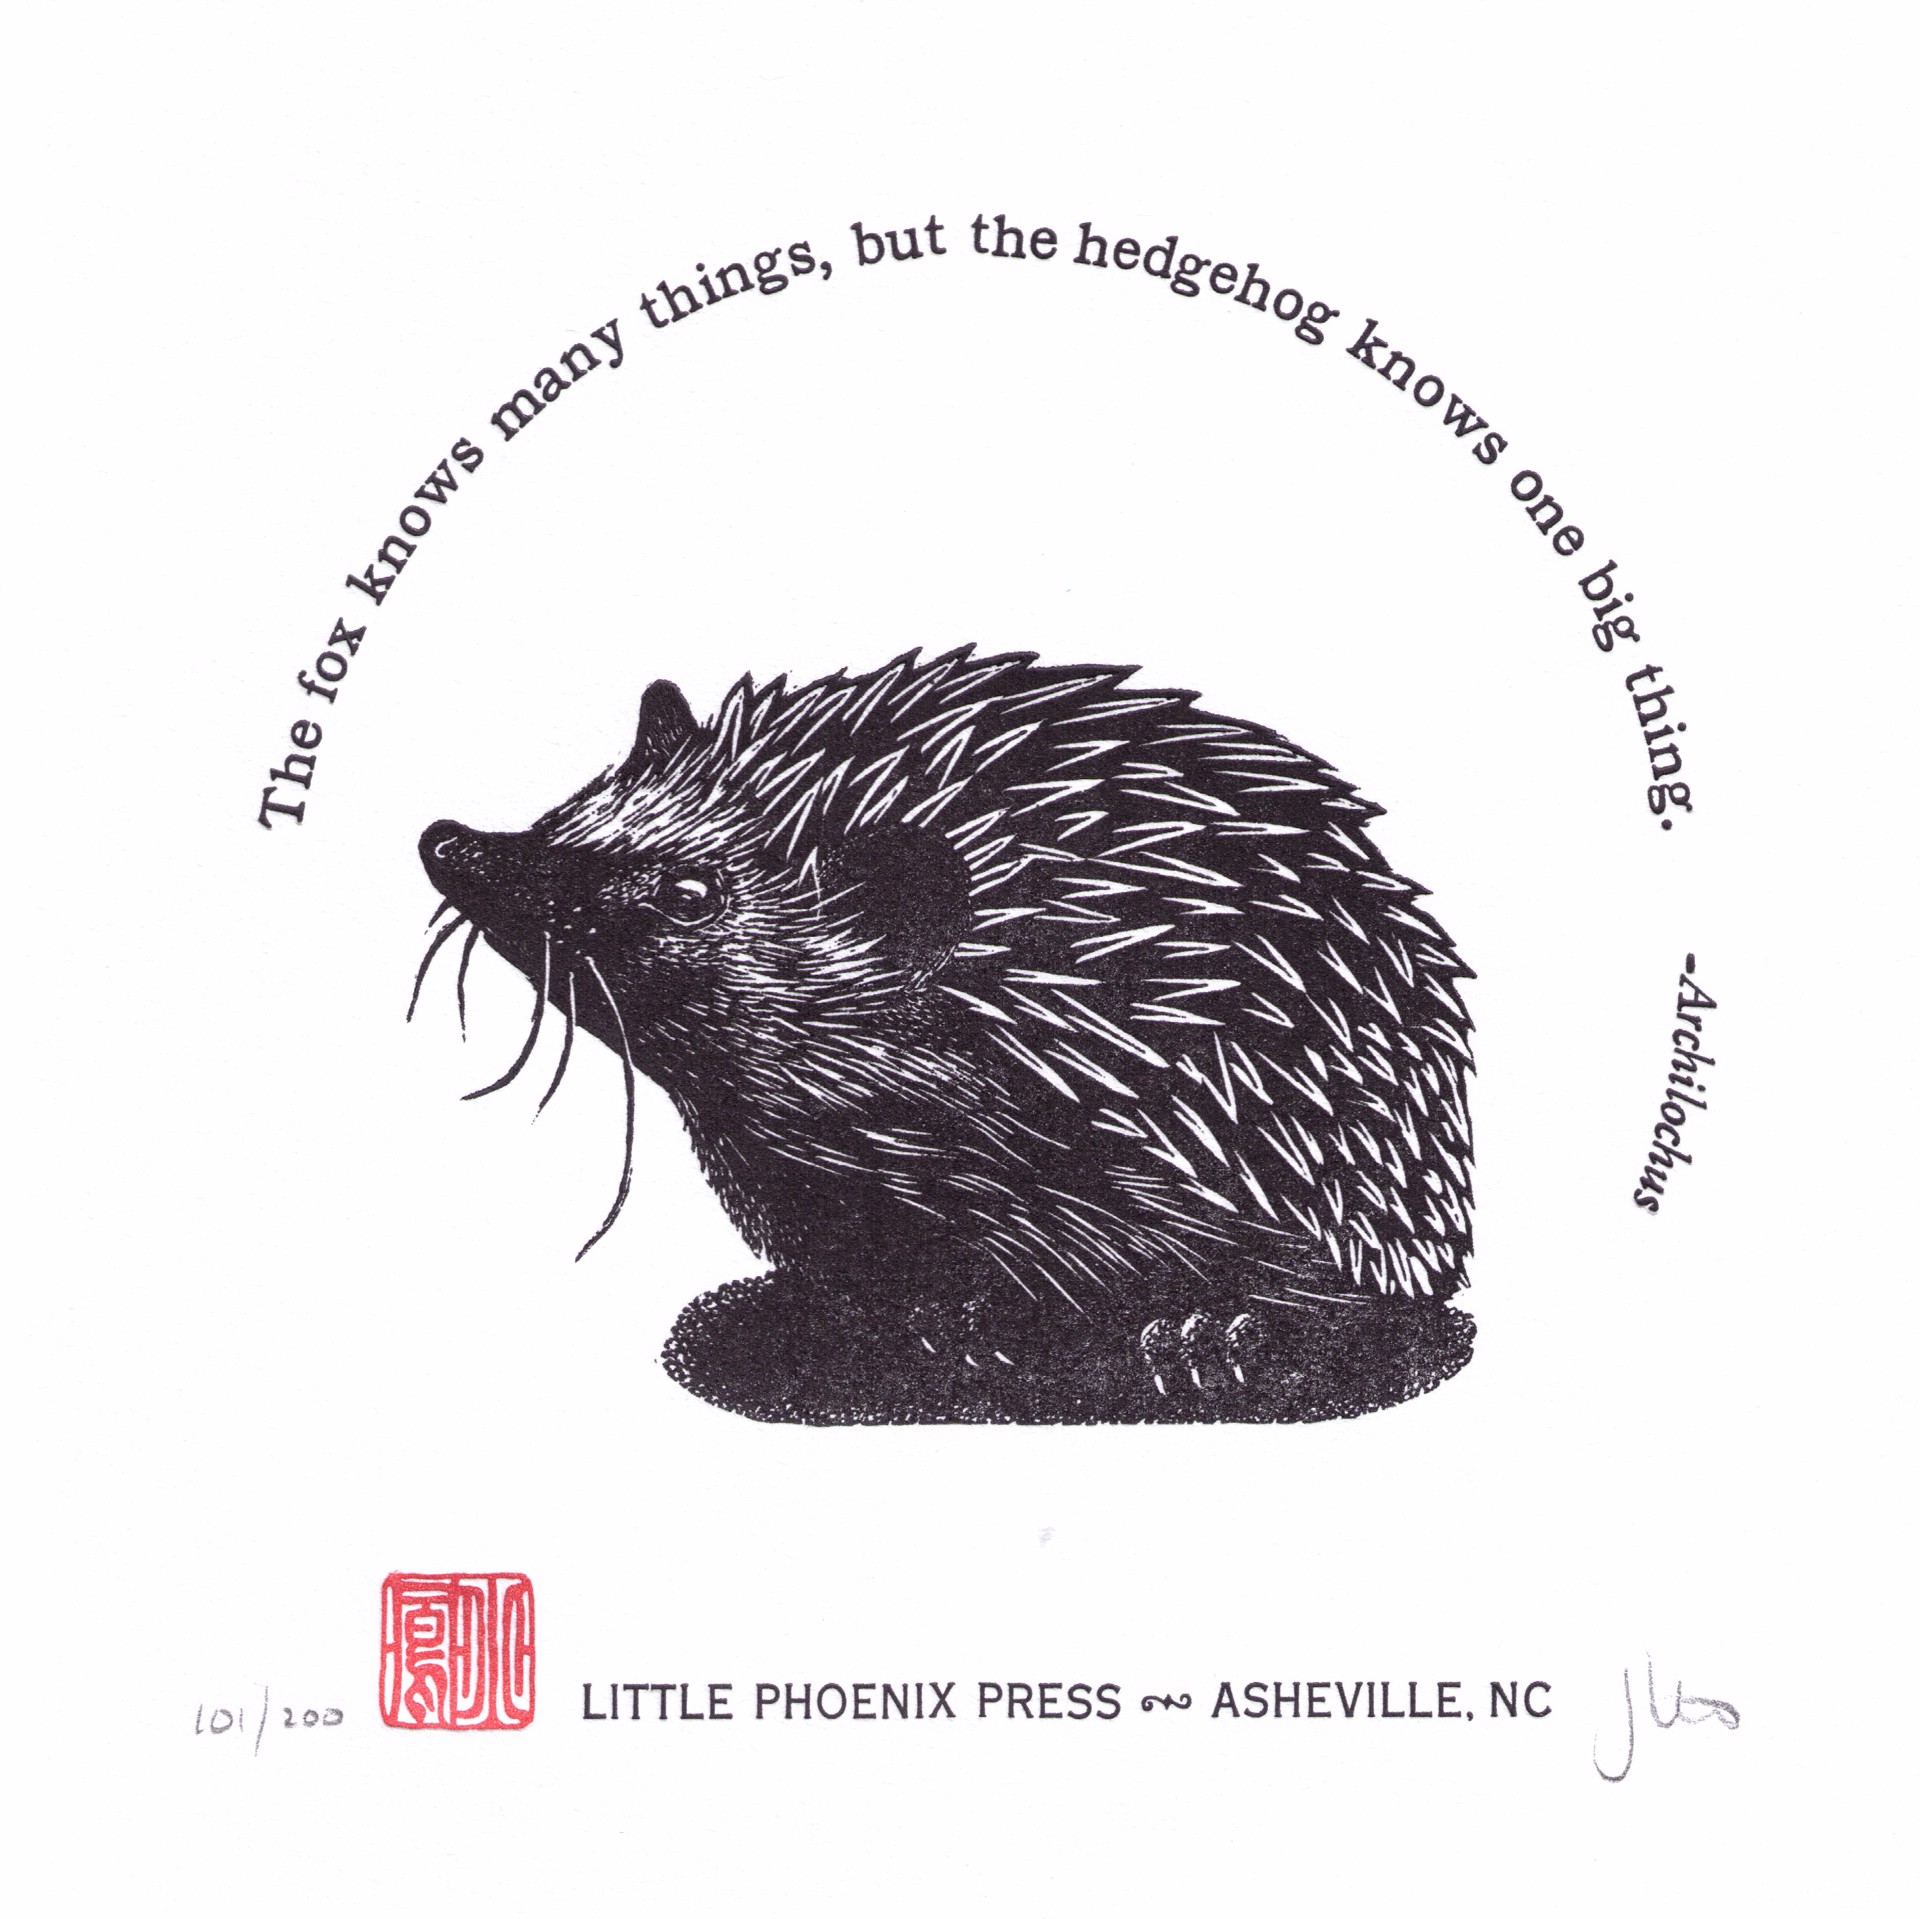 Hedgehog Knows by Jessica White